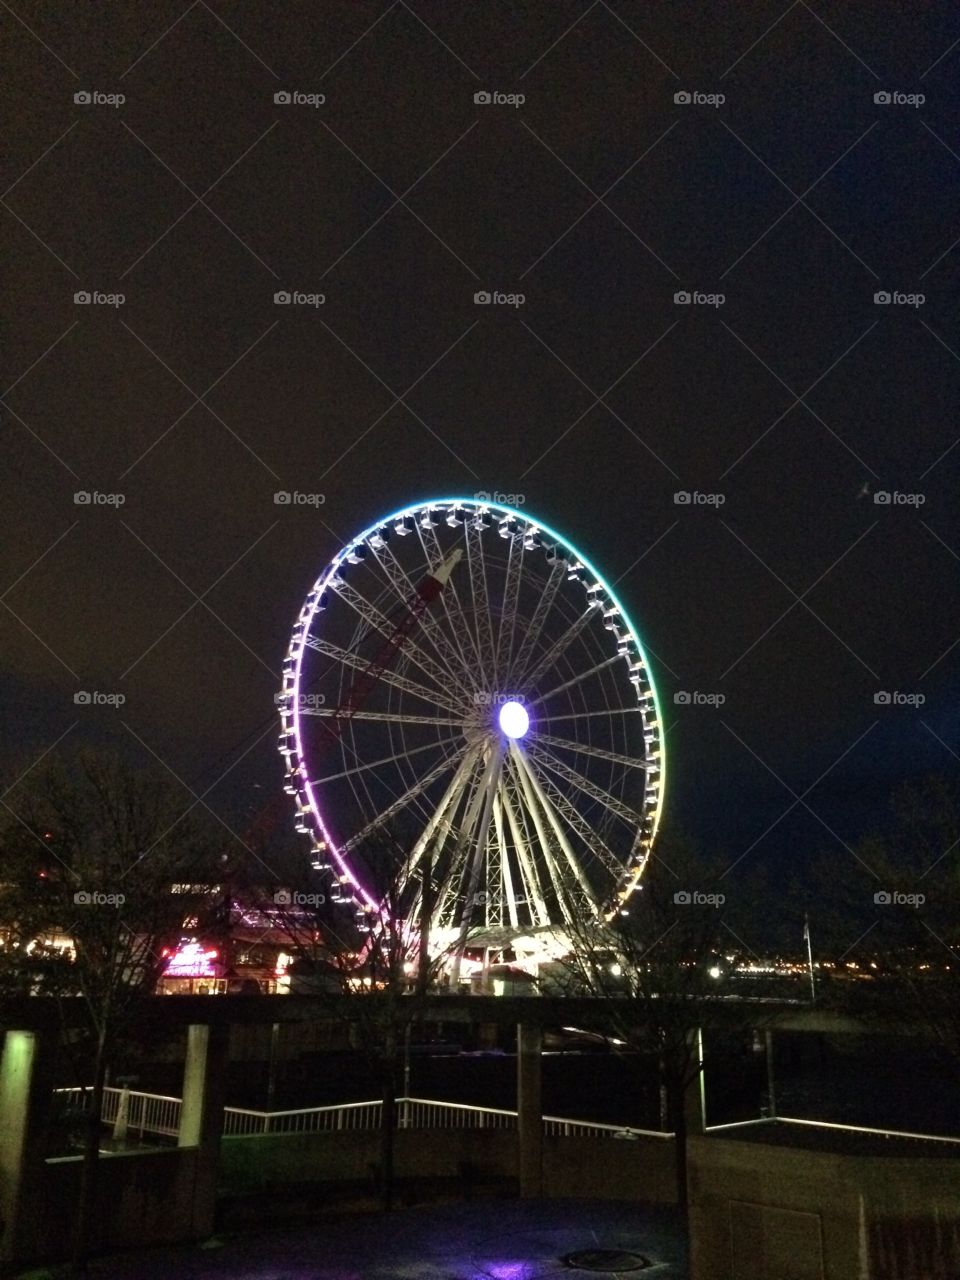 A Ferris wheel at night 